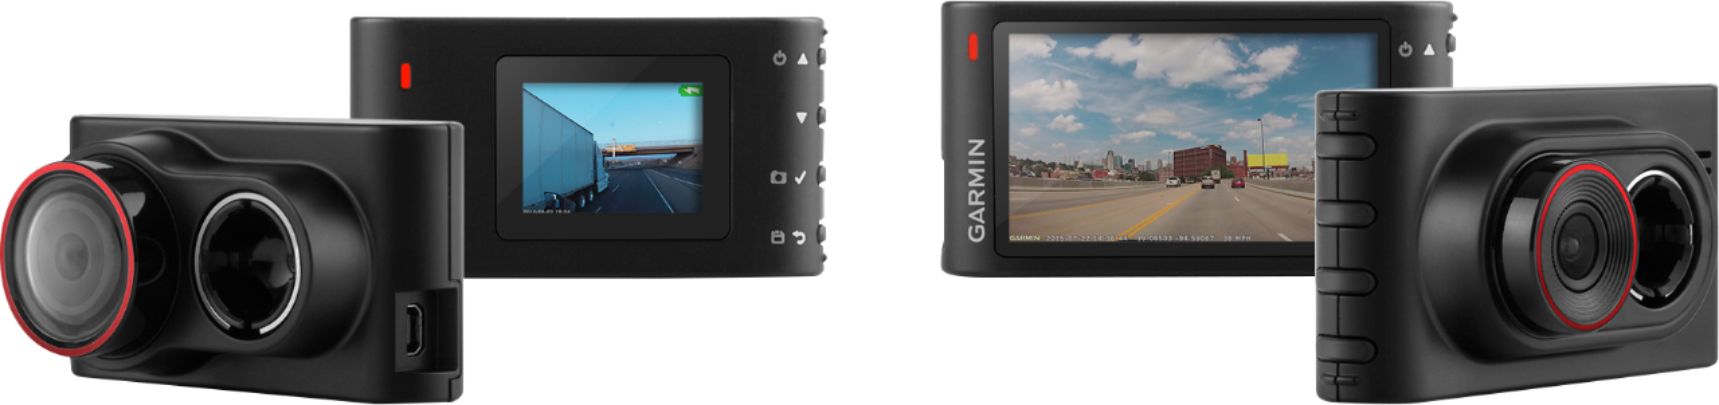 Garmin Dash Cam™ 55 (1440p HD) Black/Copper 010-01750-10 - Best Buy